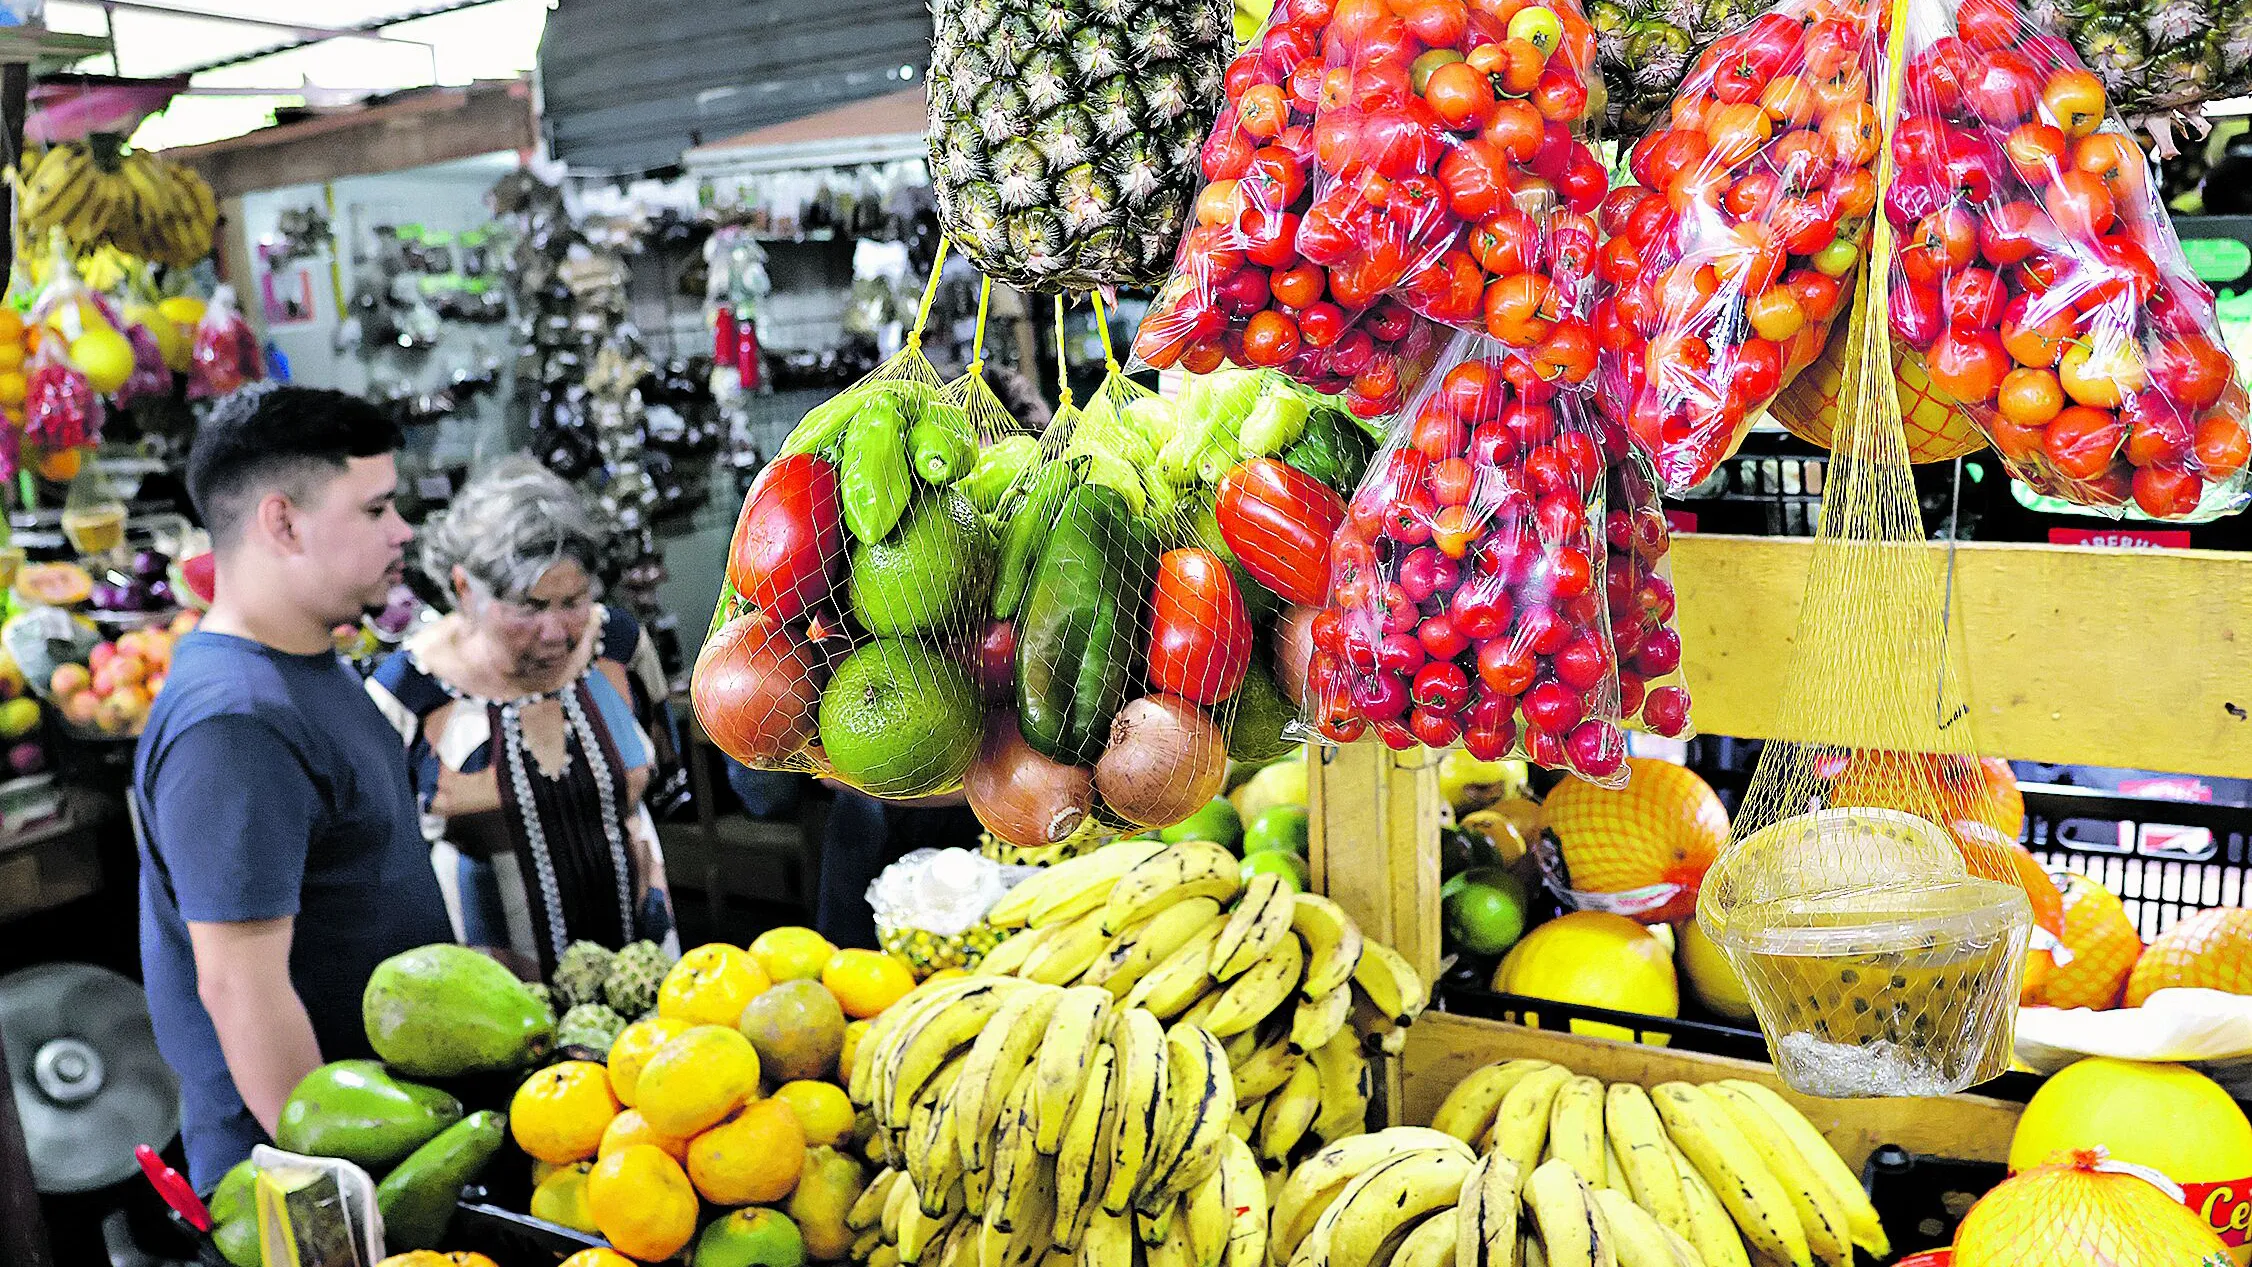 É possível comprar, nas feiras de Belém, frutas por menos de R$ 10. Cintia Cunha (abaixo) aproveita